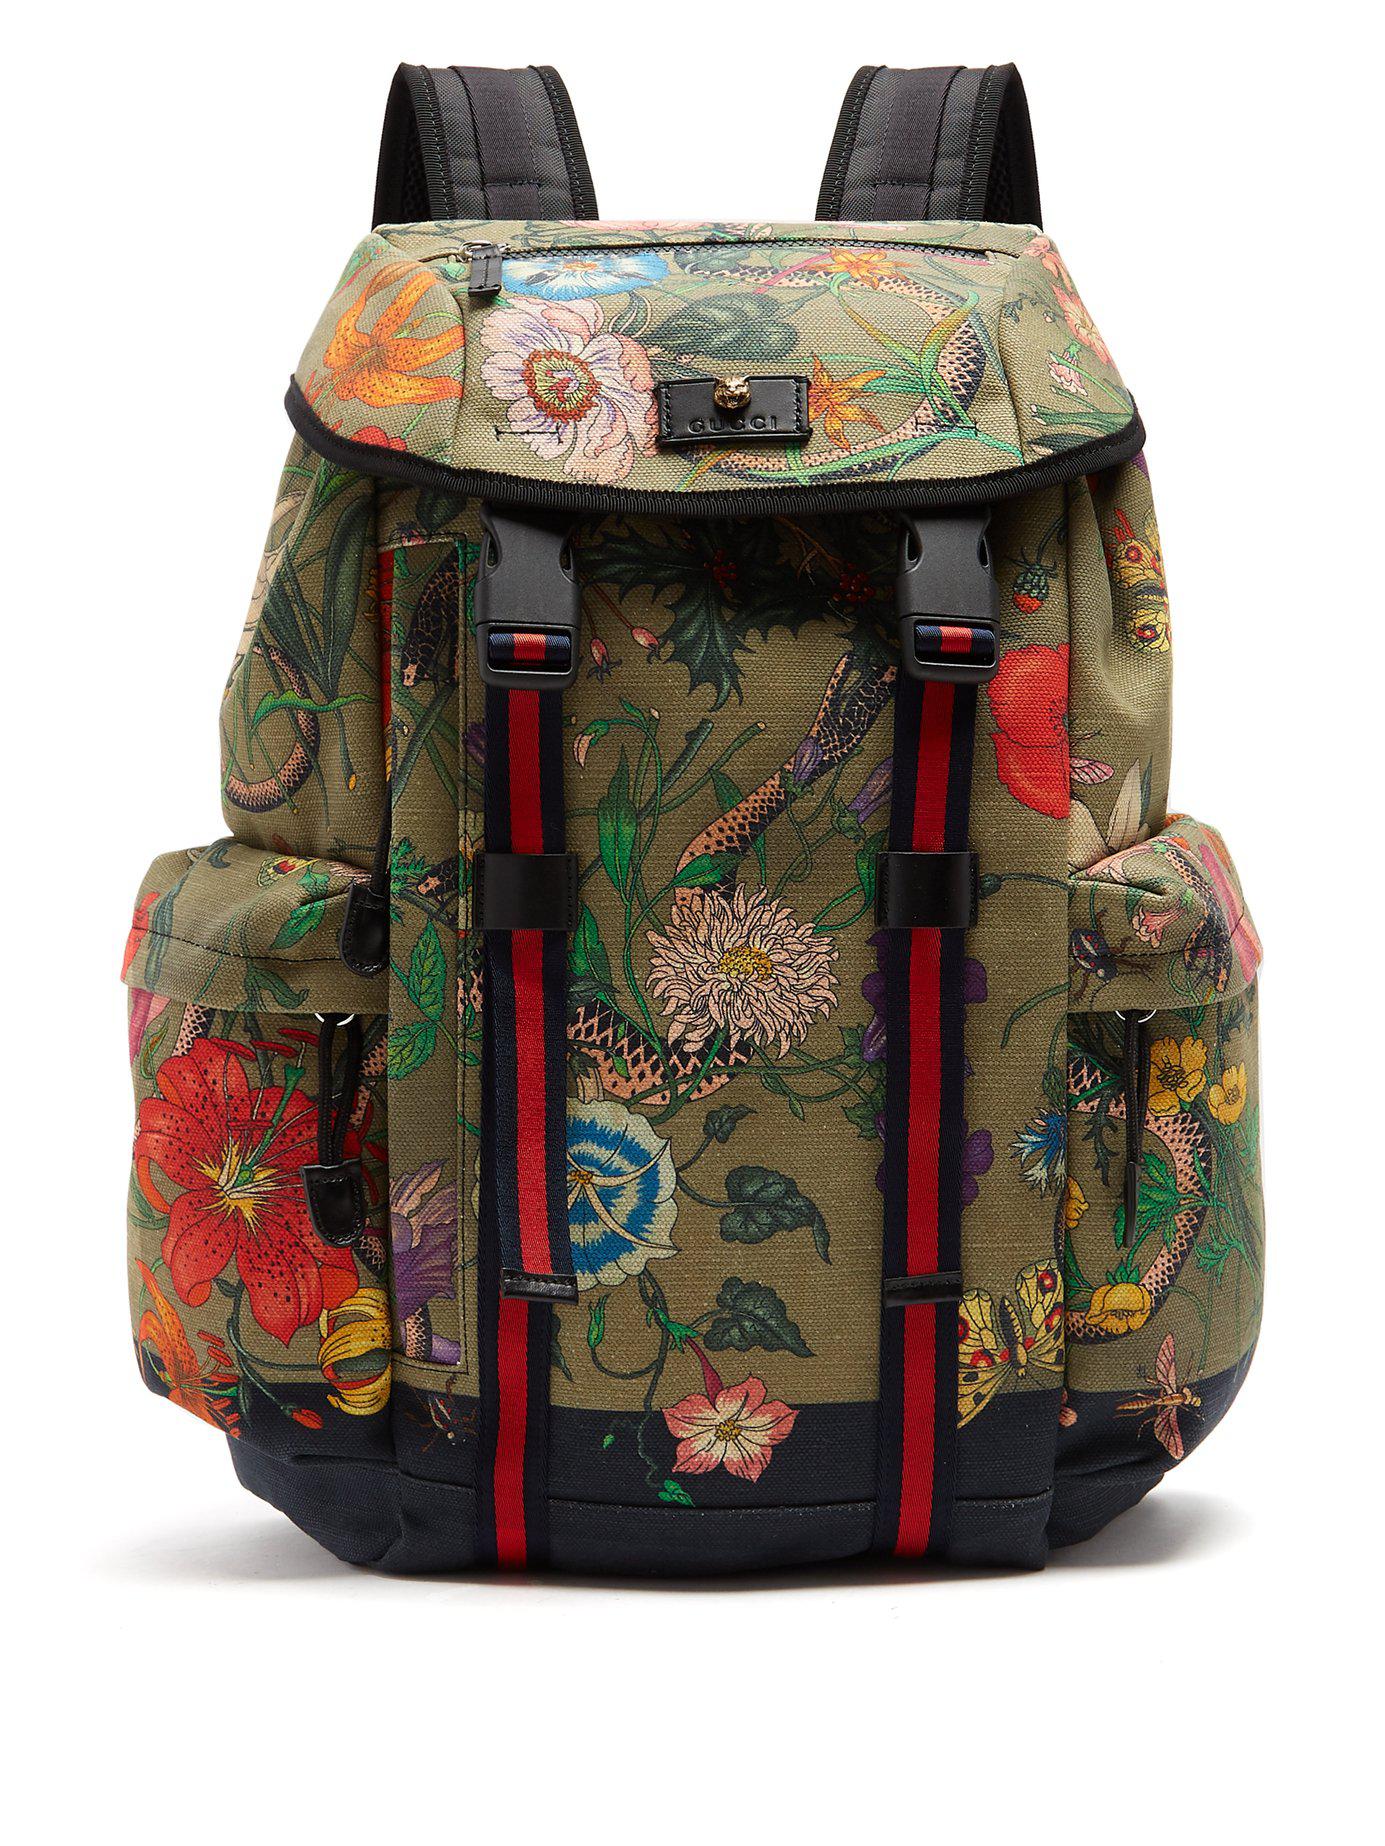 Gucci Canvas Floral Snake Print Backpack for Men - Lyst